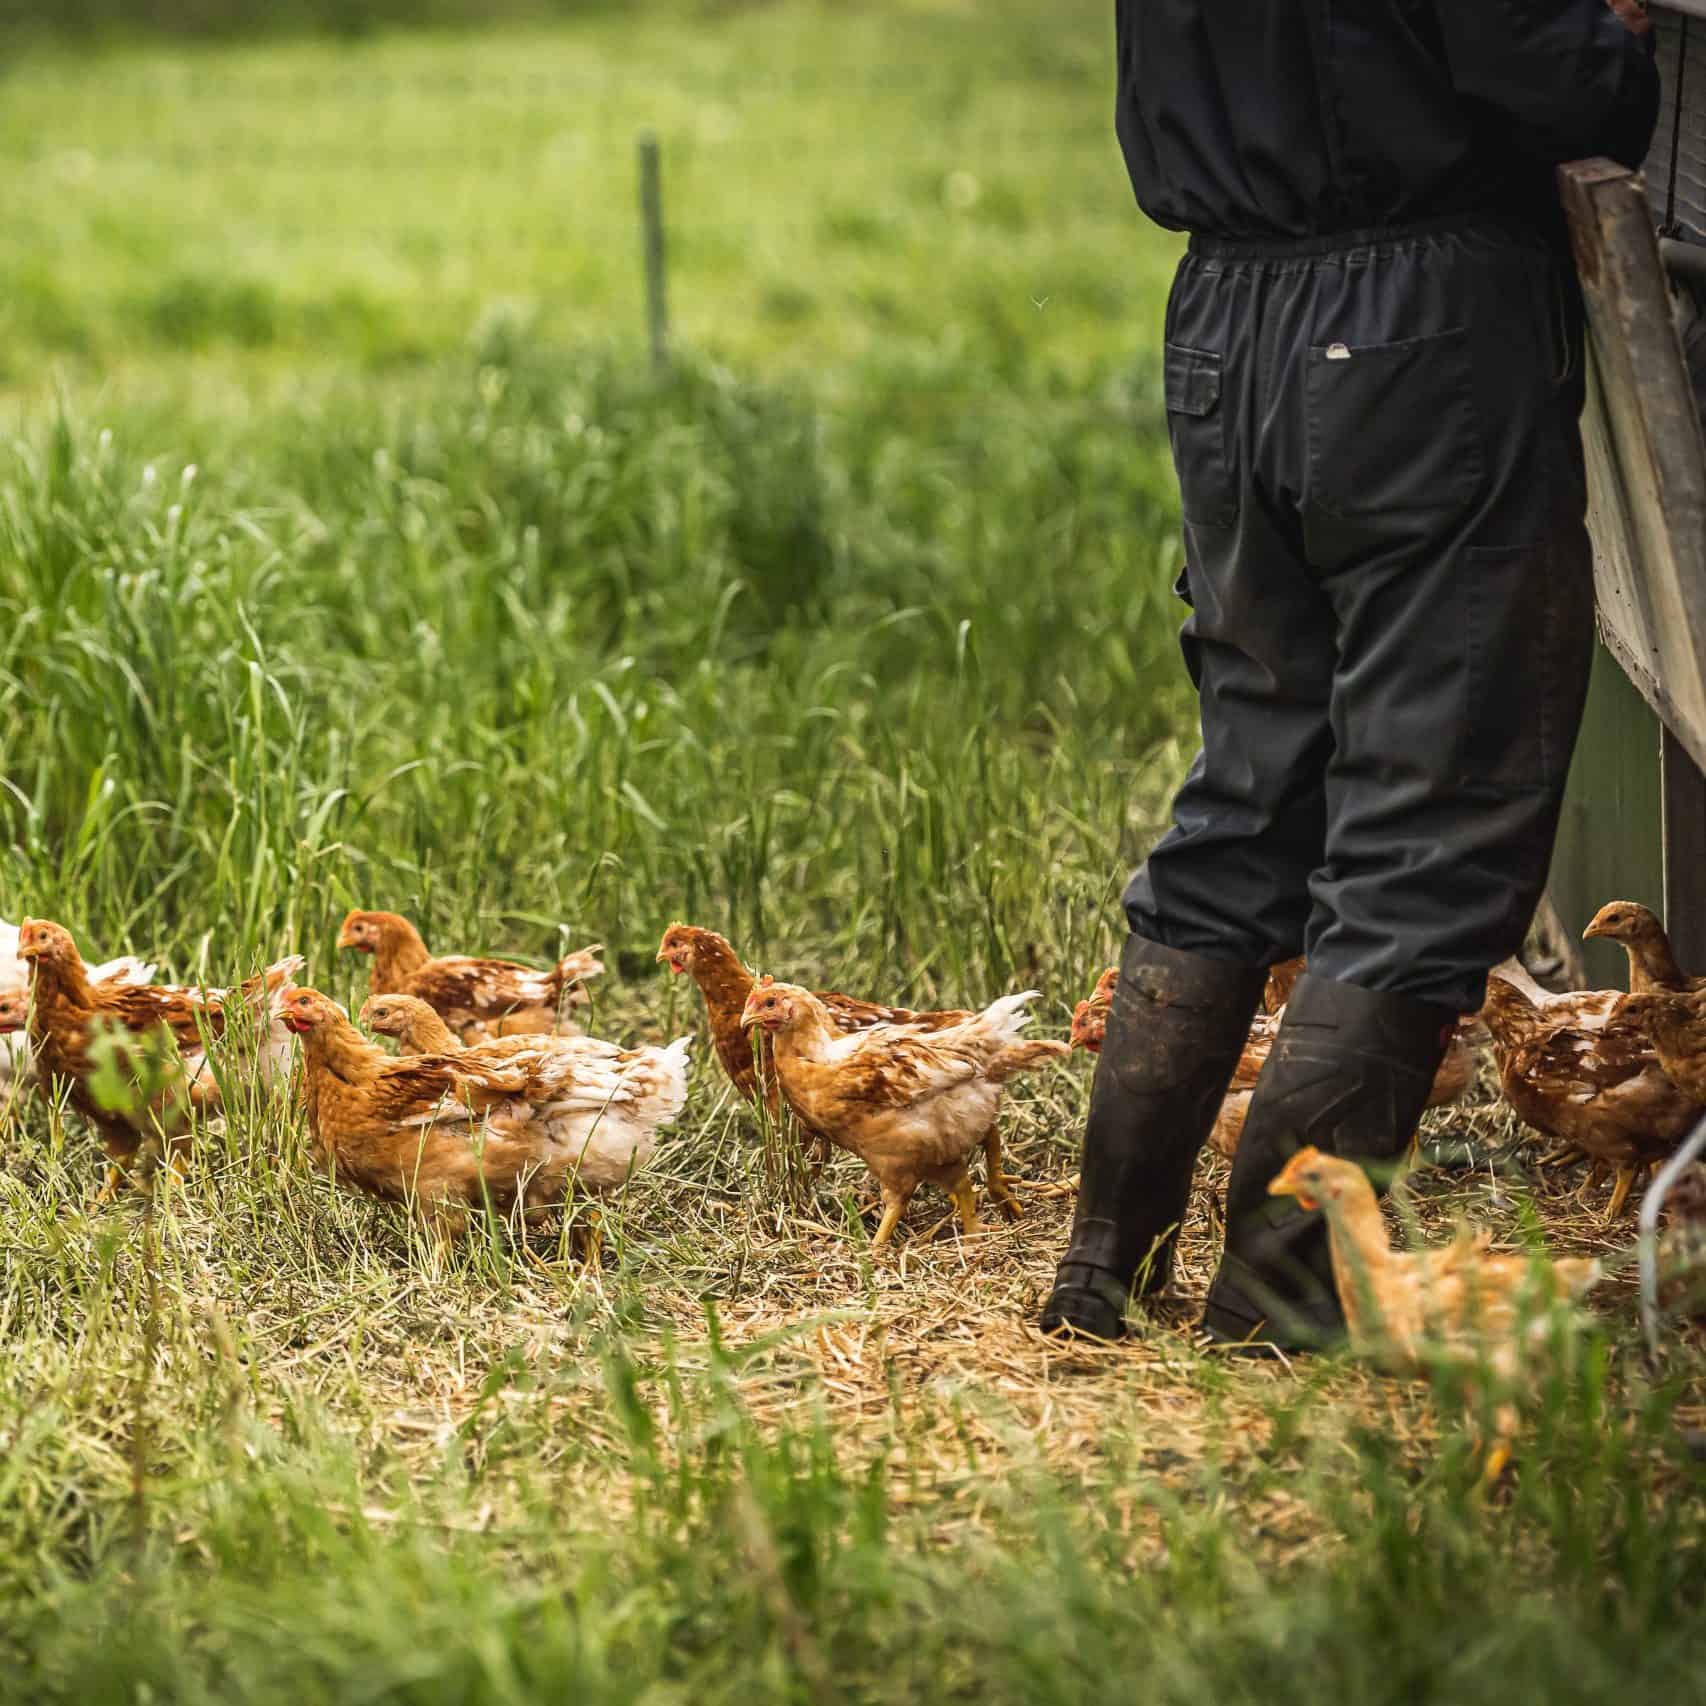 Organic free-range chickens on grass by farmers feet